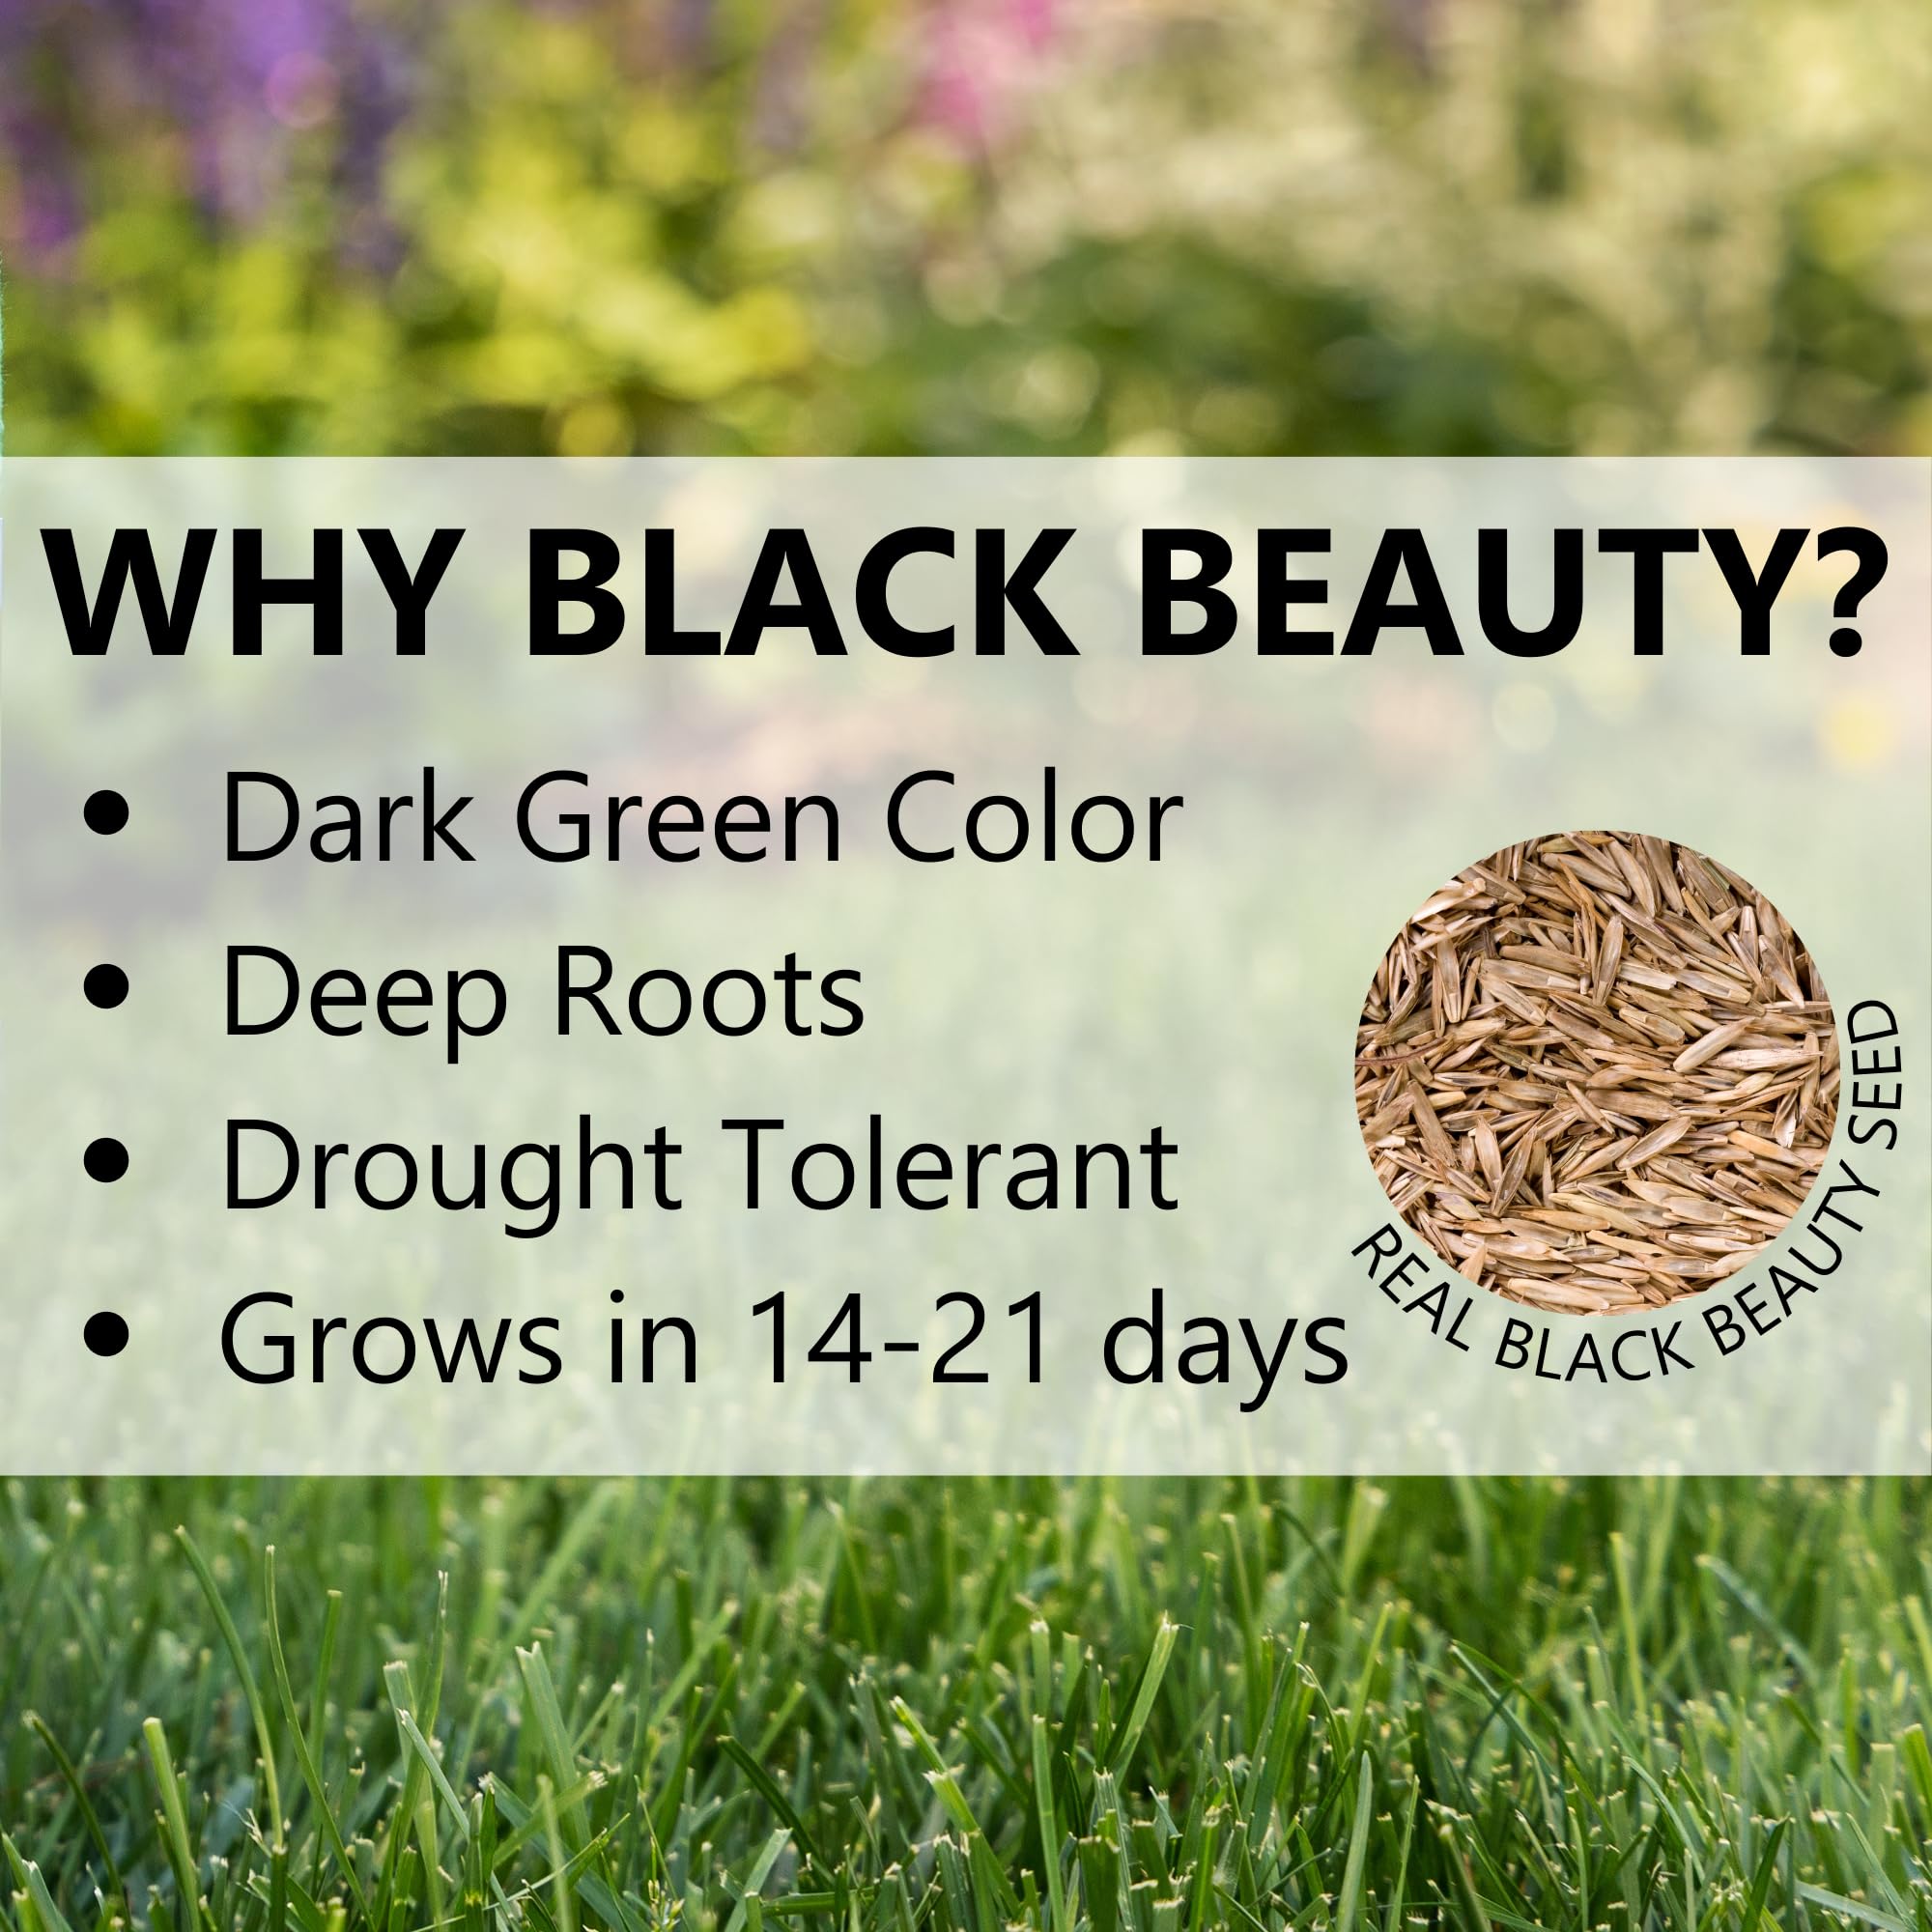 Jonathan Green (10610) Black Beauty Dense Shade Grass Seed - Cool Season Lawn Seed (25 lb)